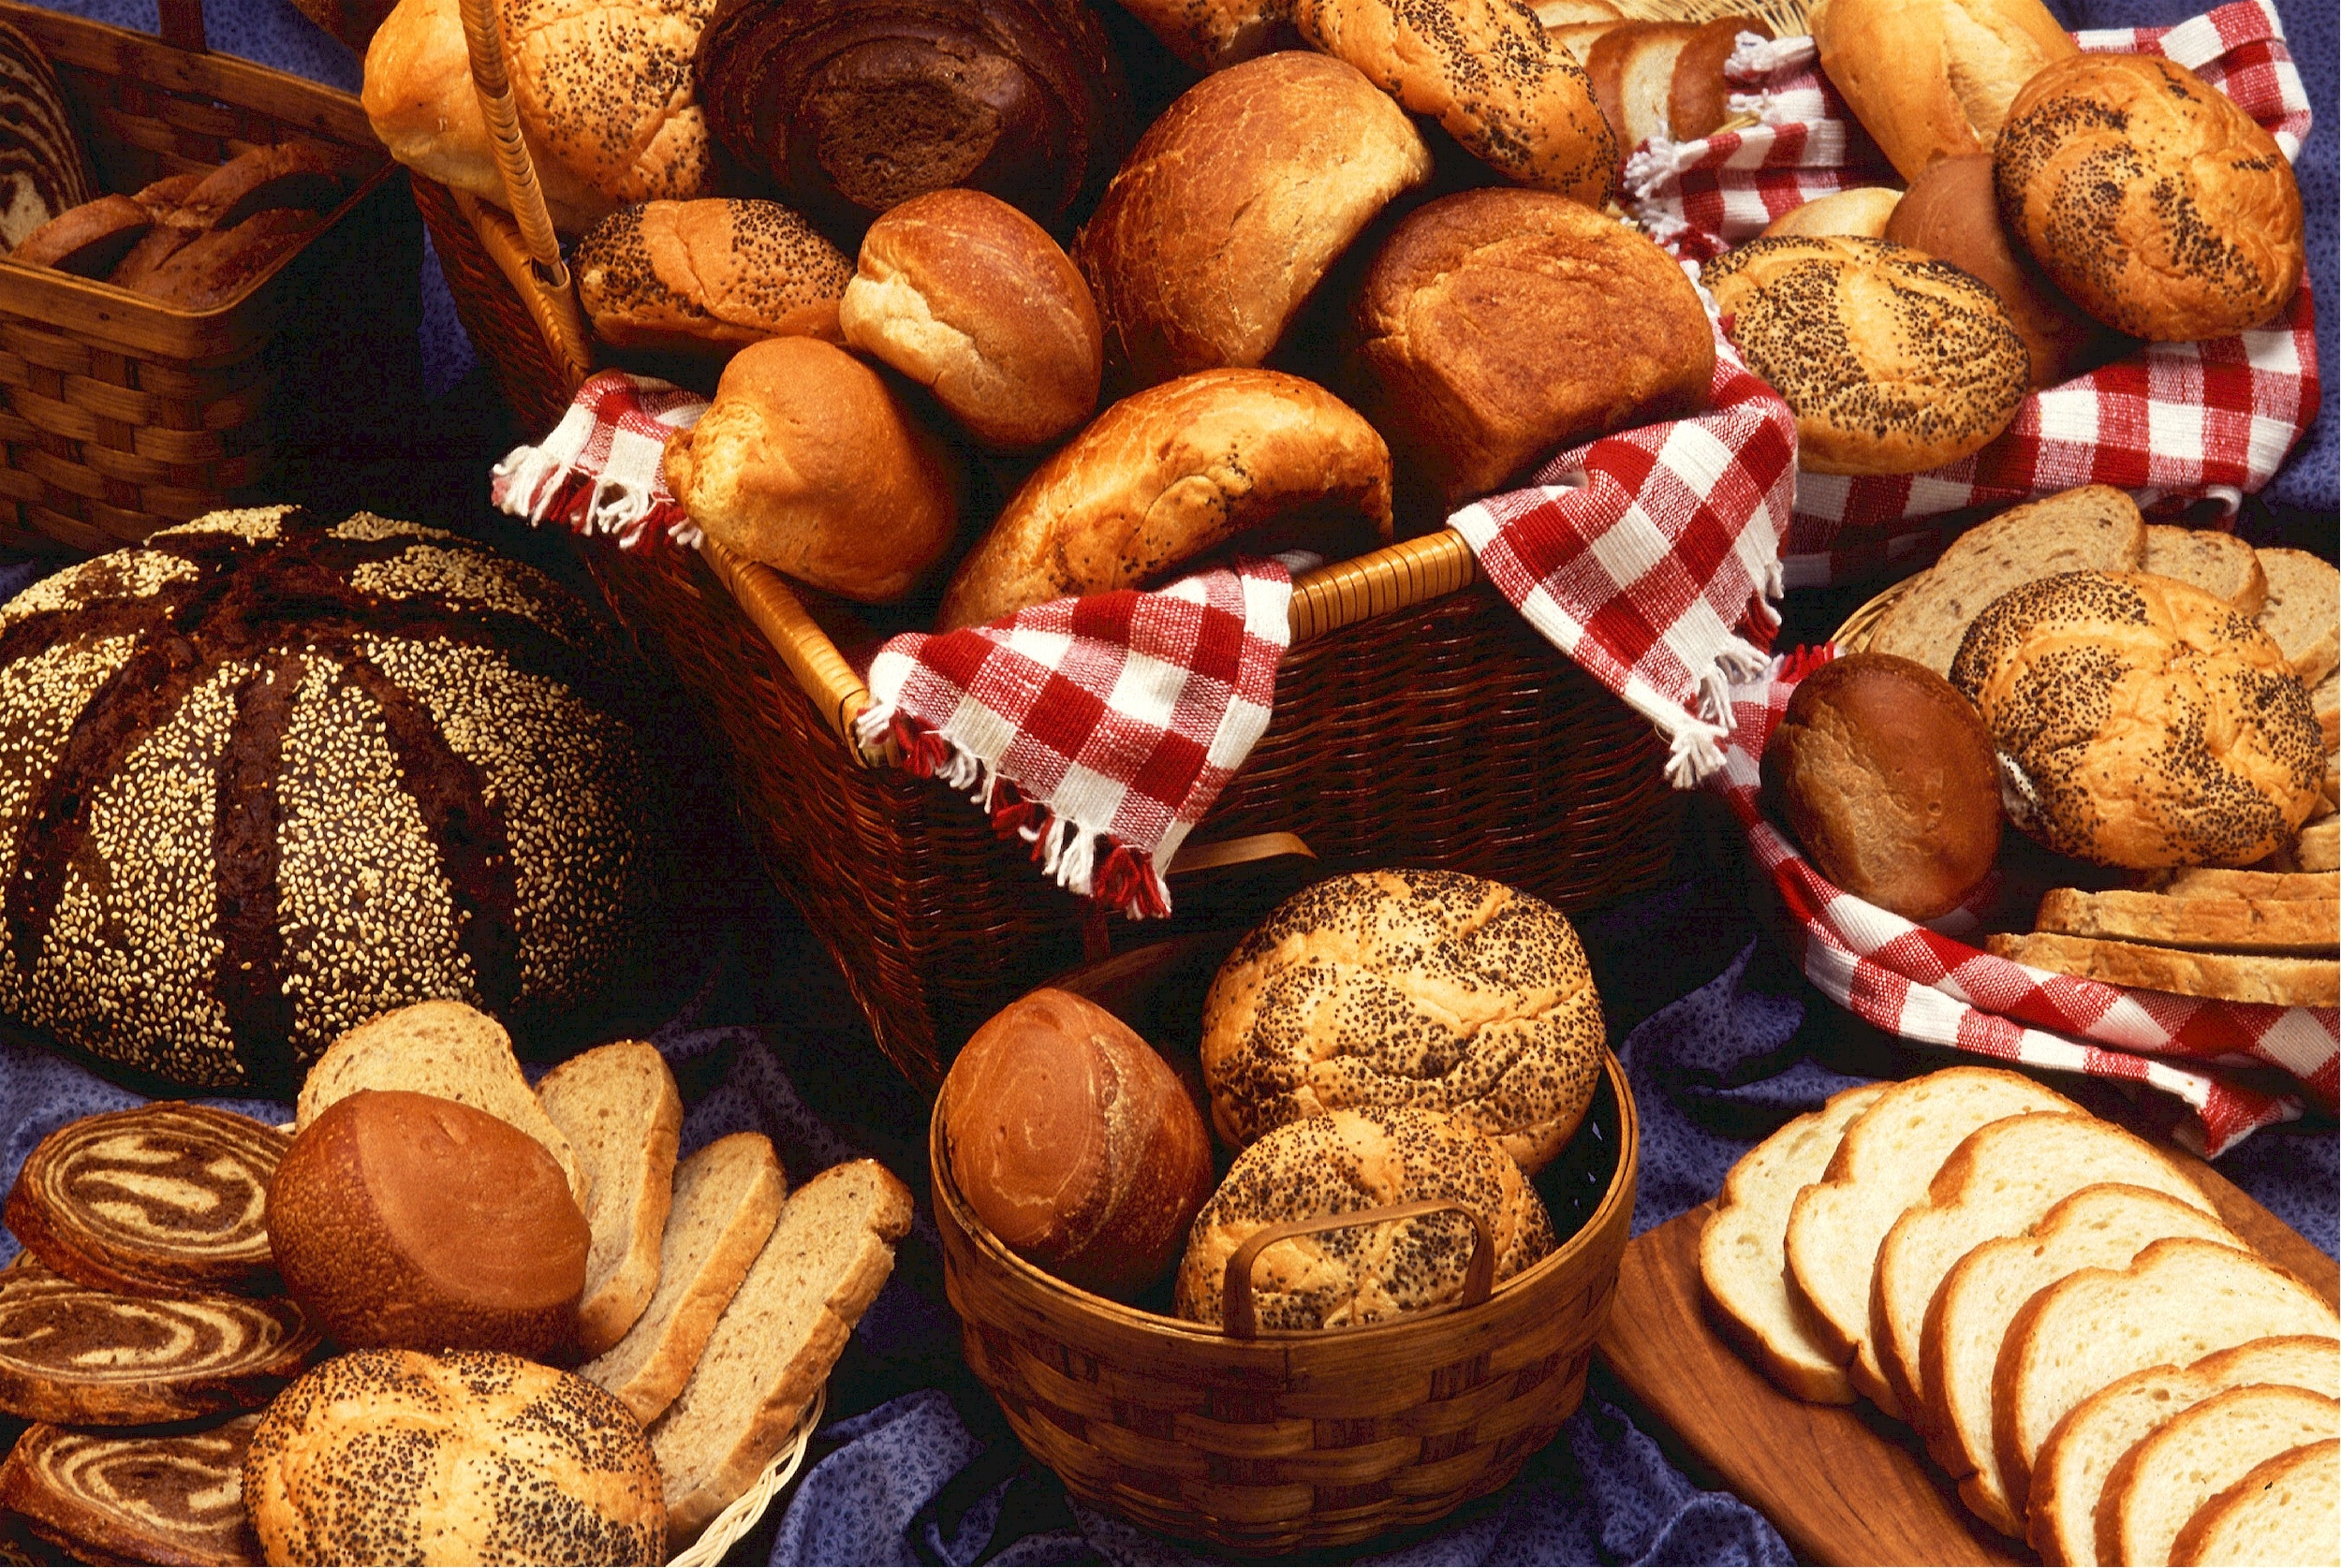 Бесплатное фото Картинка со свежеиспеченным хлебом